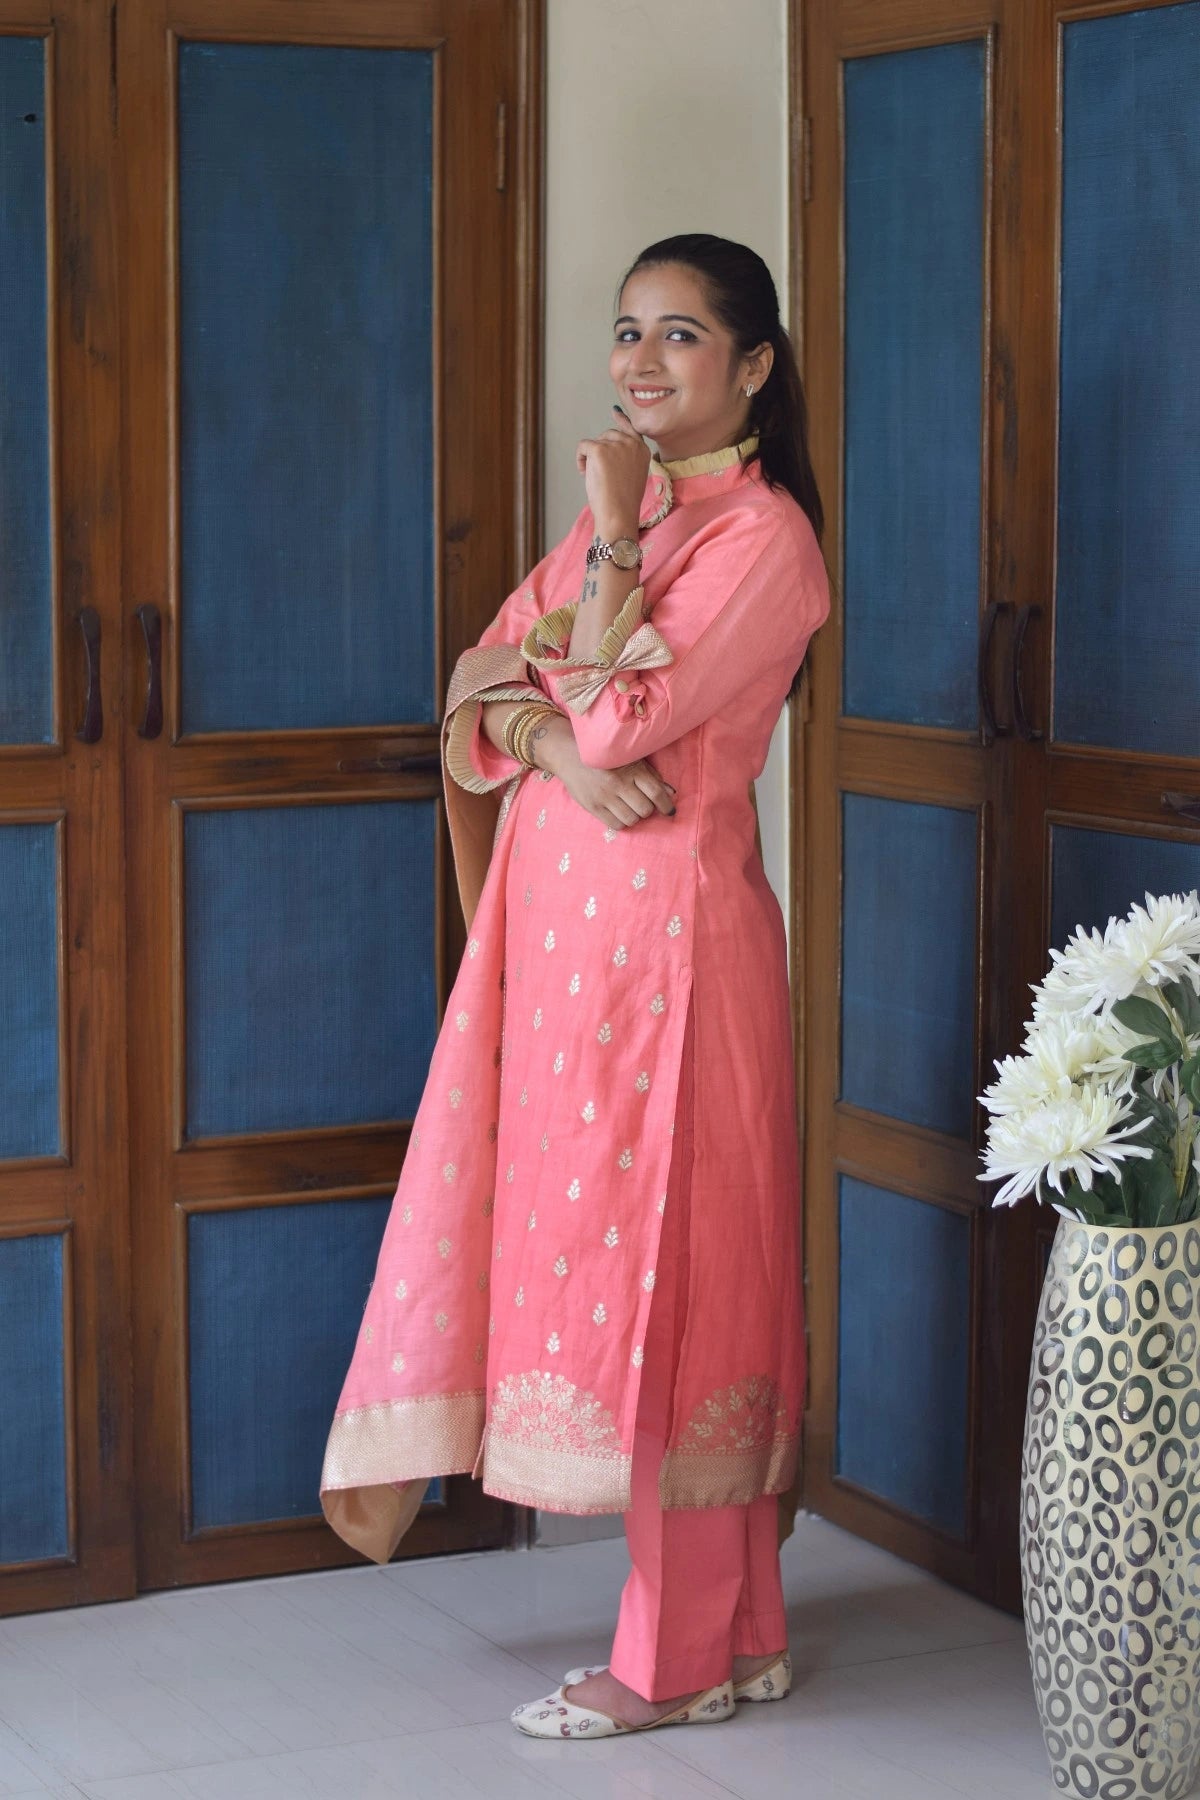 A peach-colored linen kurta with silver threadwork worn by an elegant Indian woman.